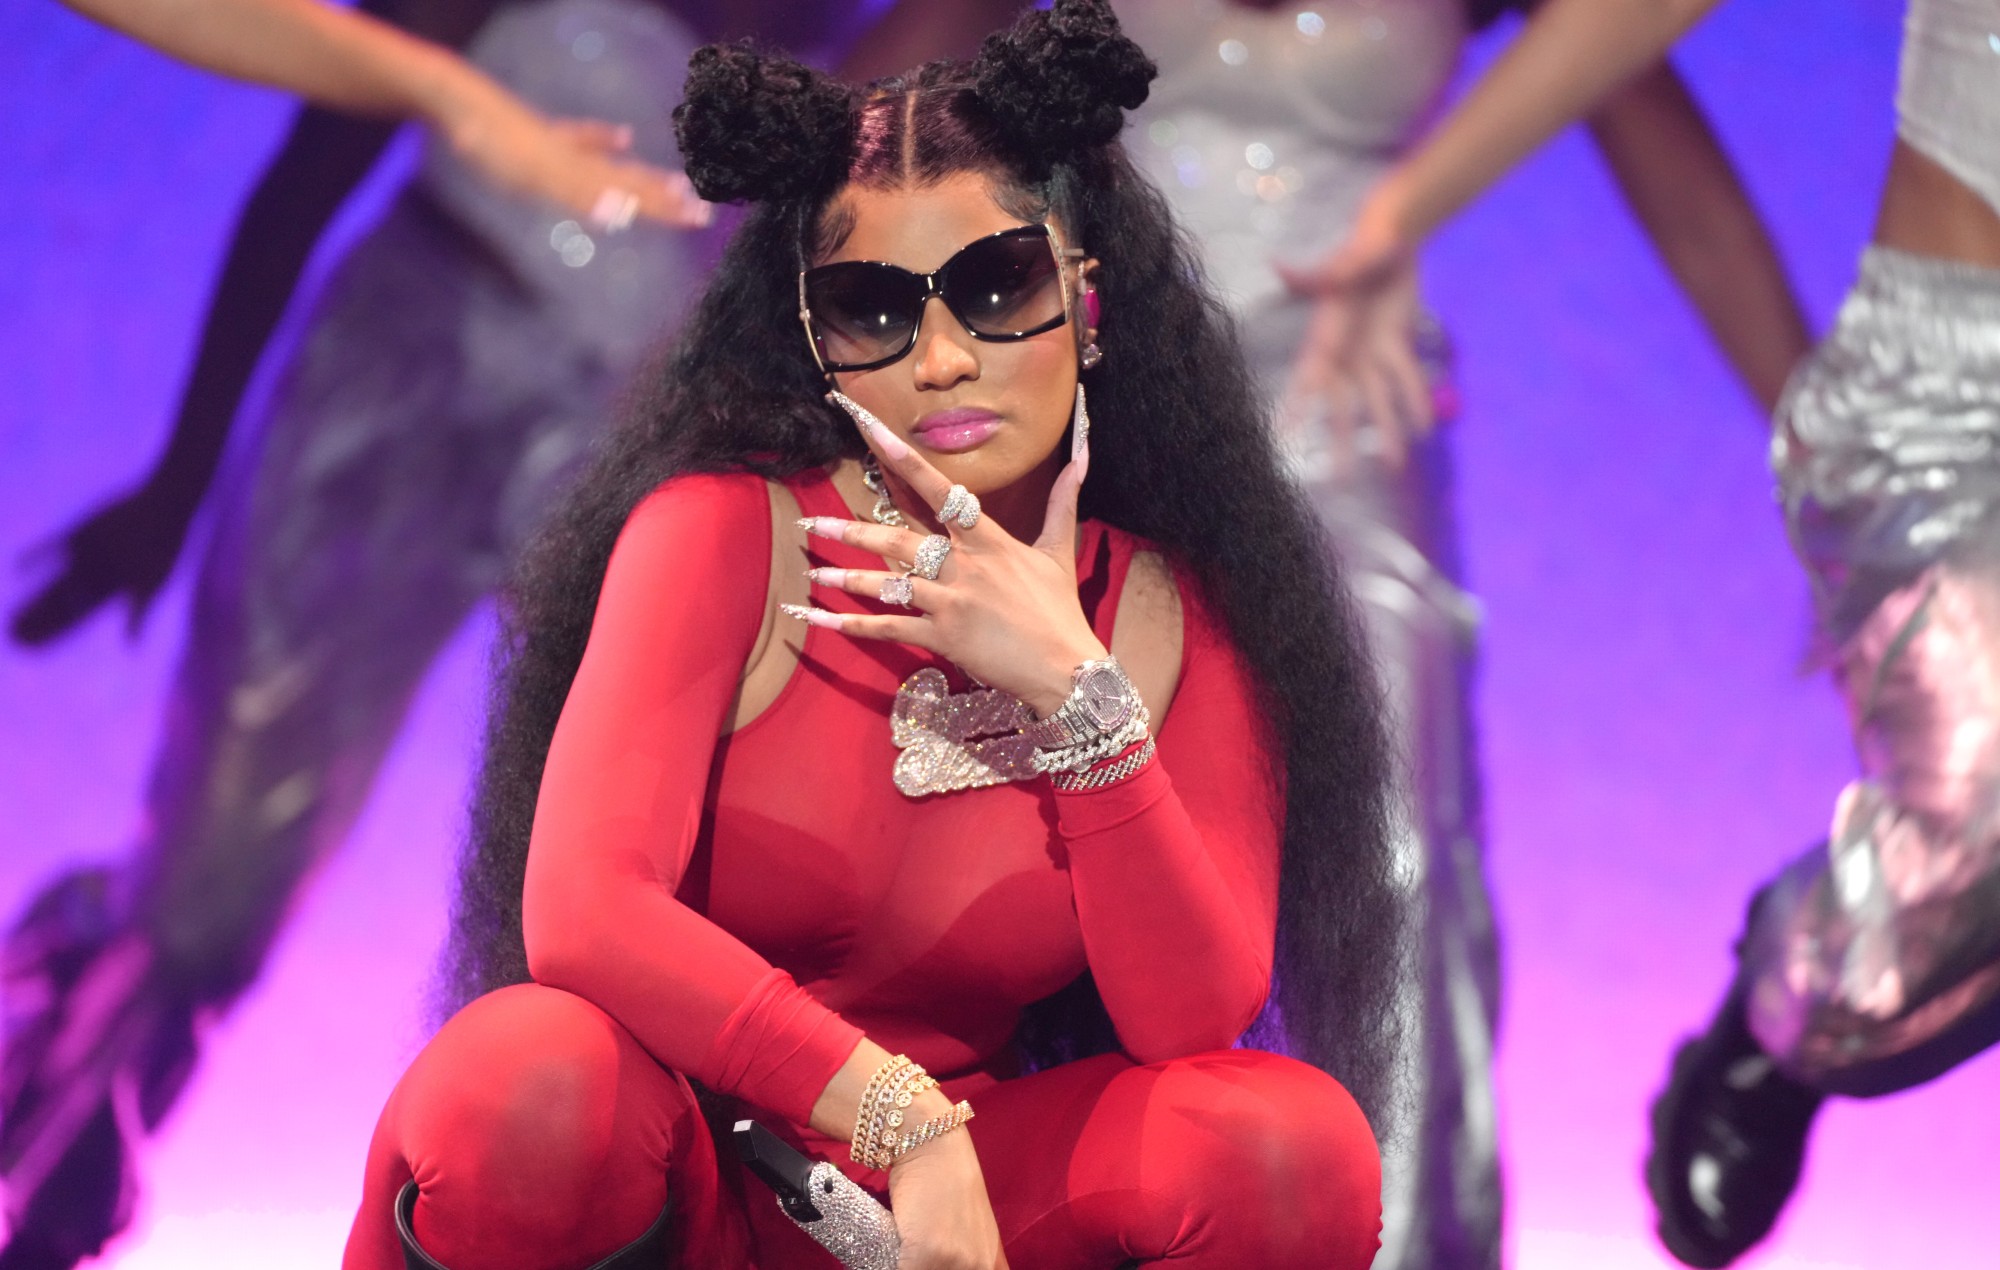 Nicki Minaj delays new album until her birthday